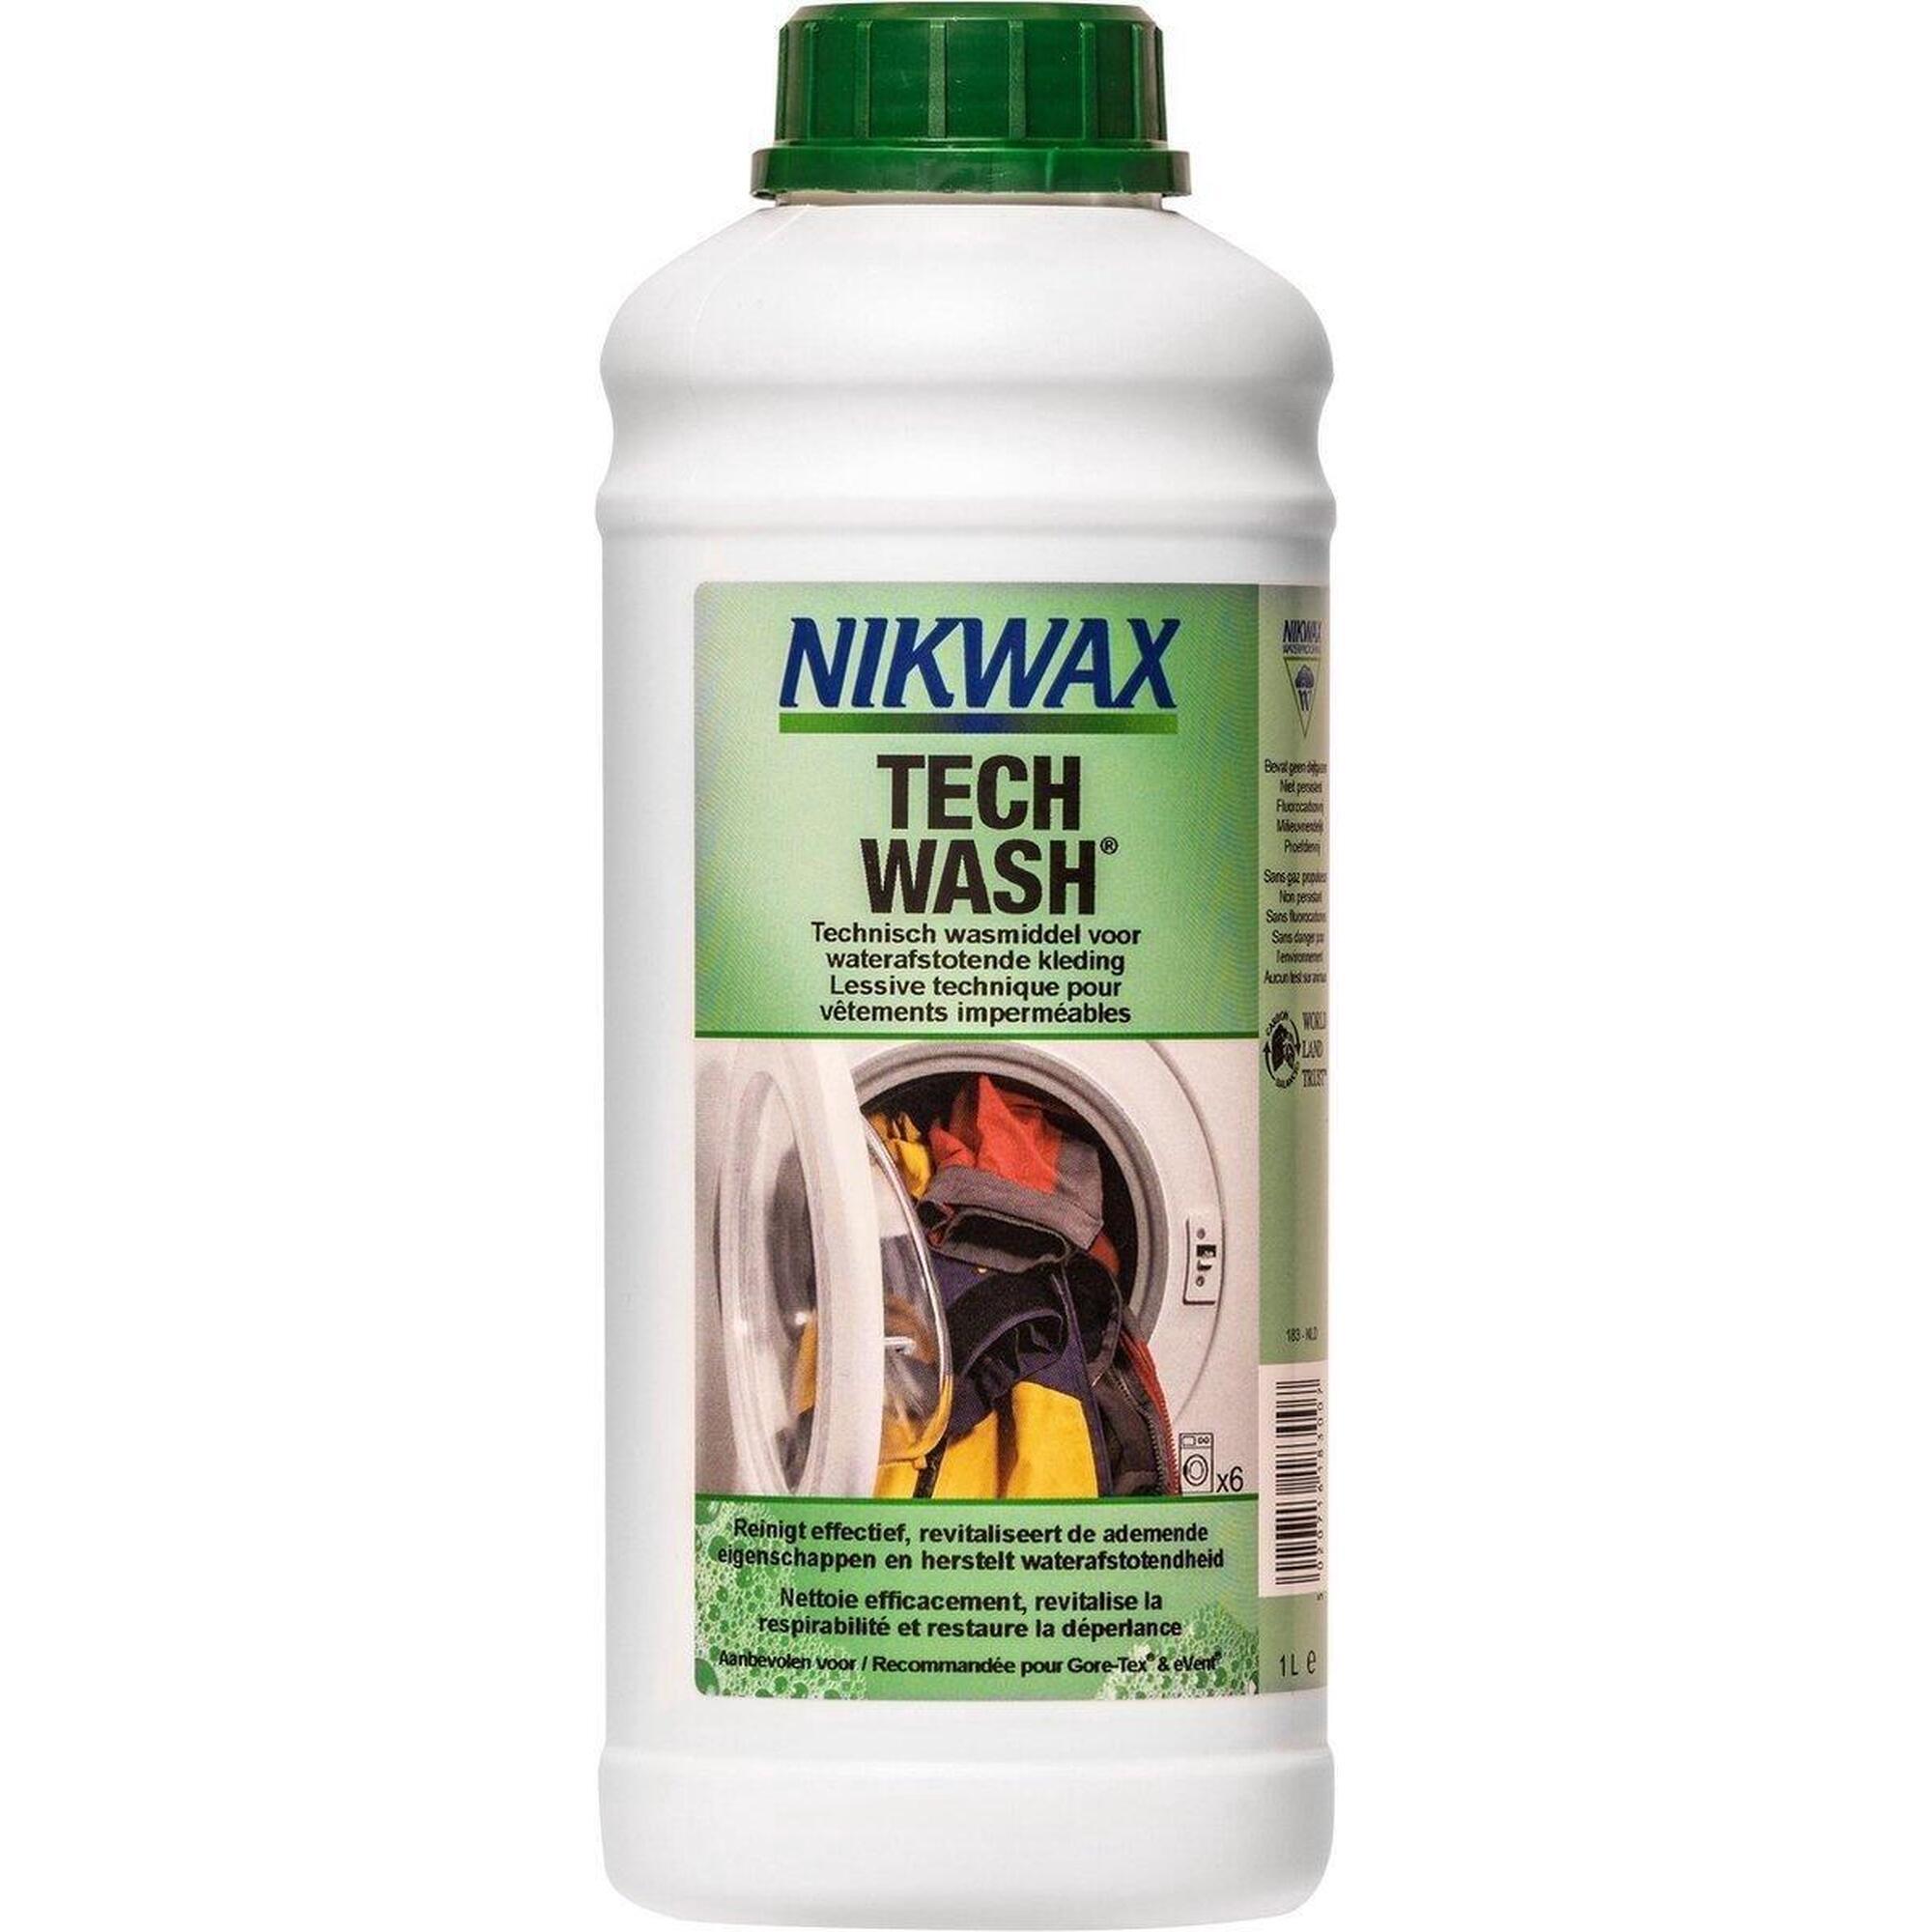 Impregneermiddel voordeelpakkket - Nikwax 2x Tech Wash & 2x TX Direct Spray on